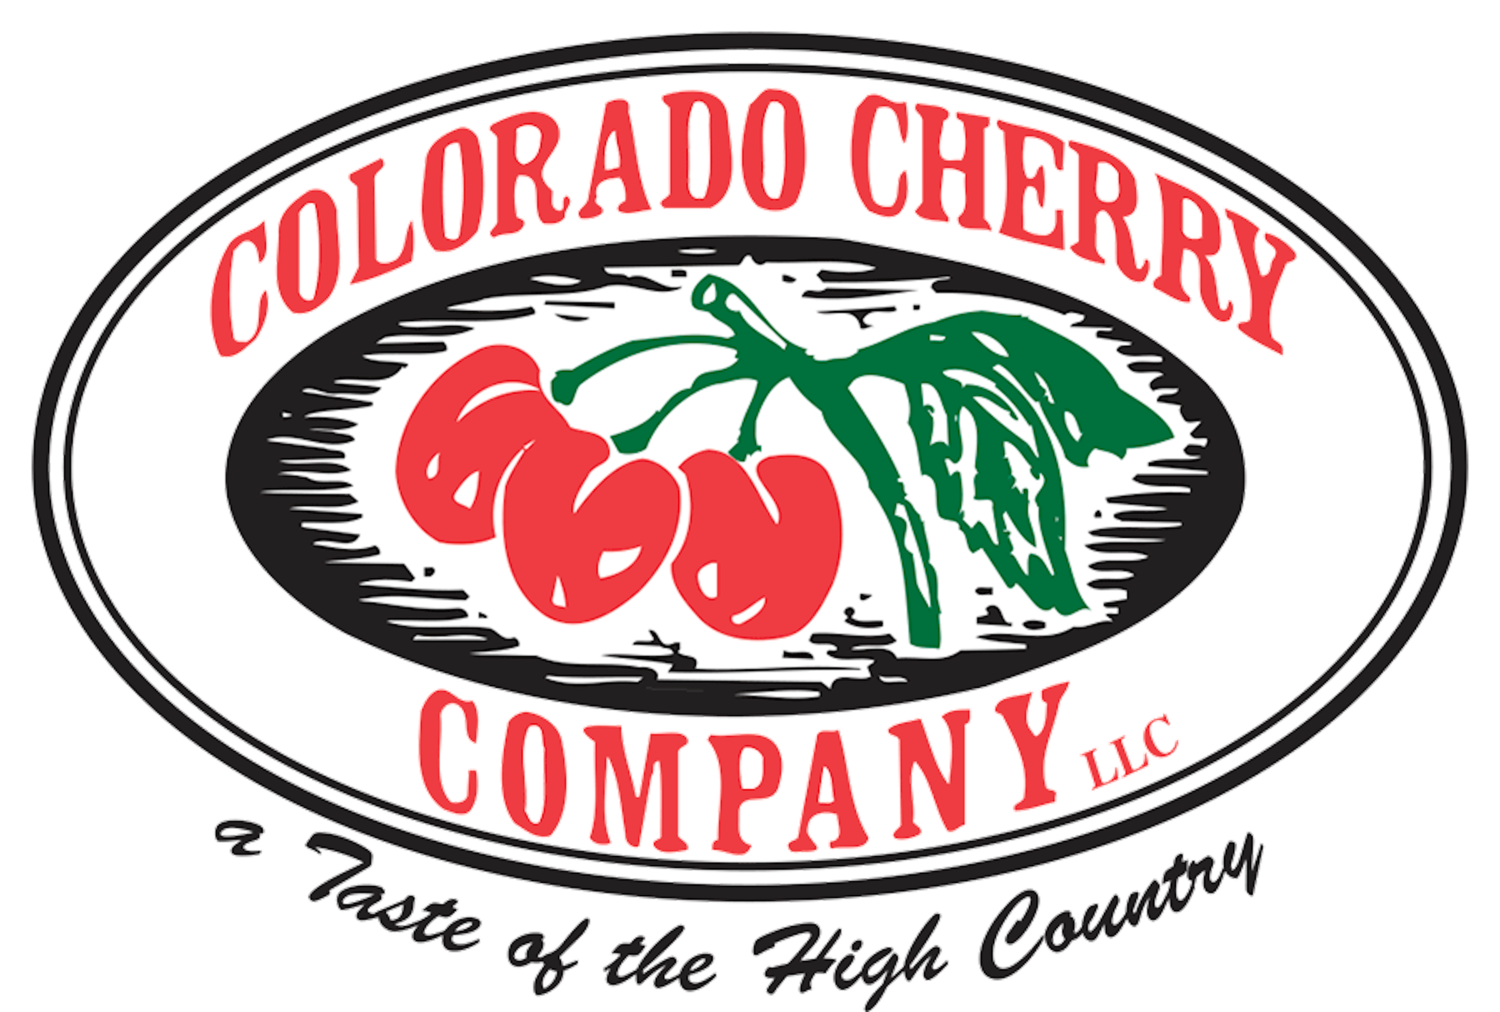 COLORADO CHERRY COMPANY 